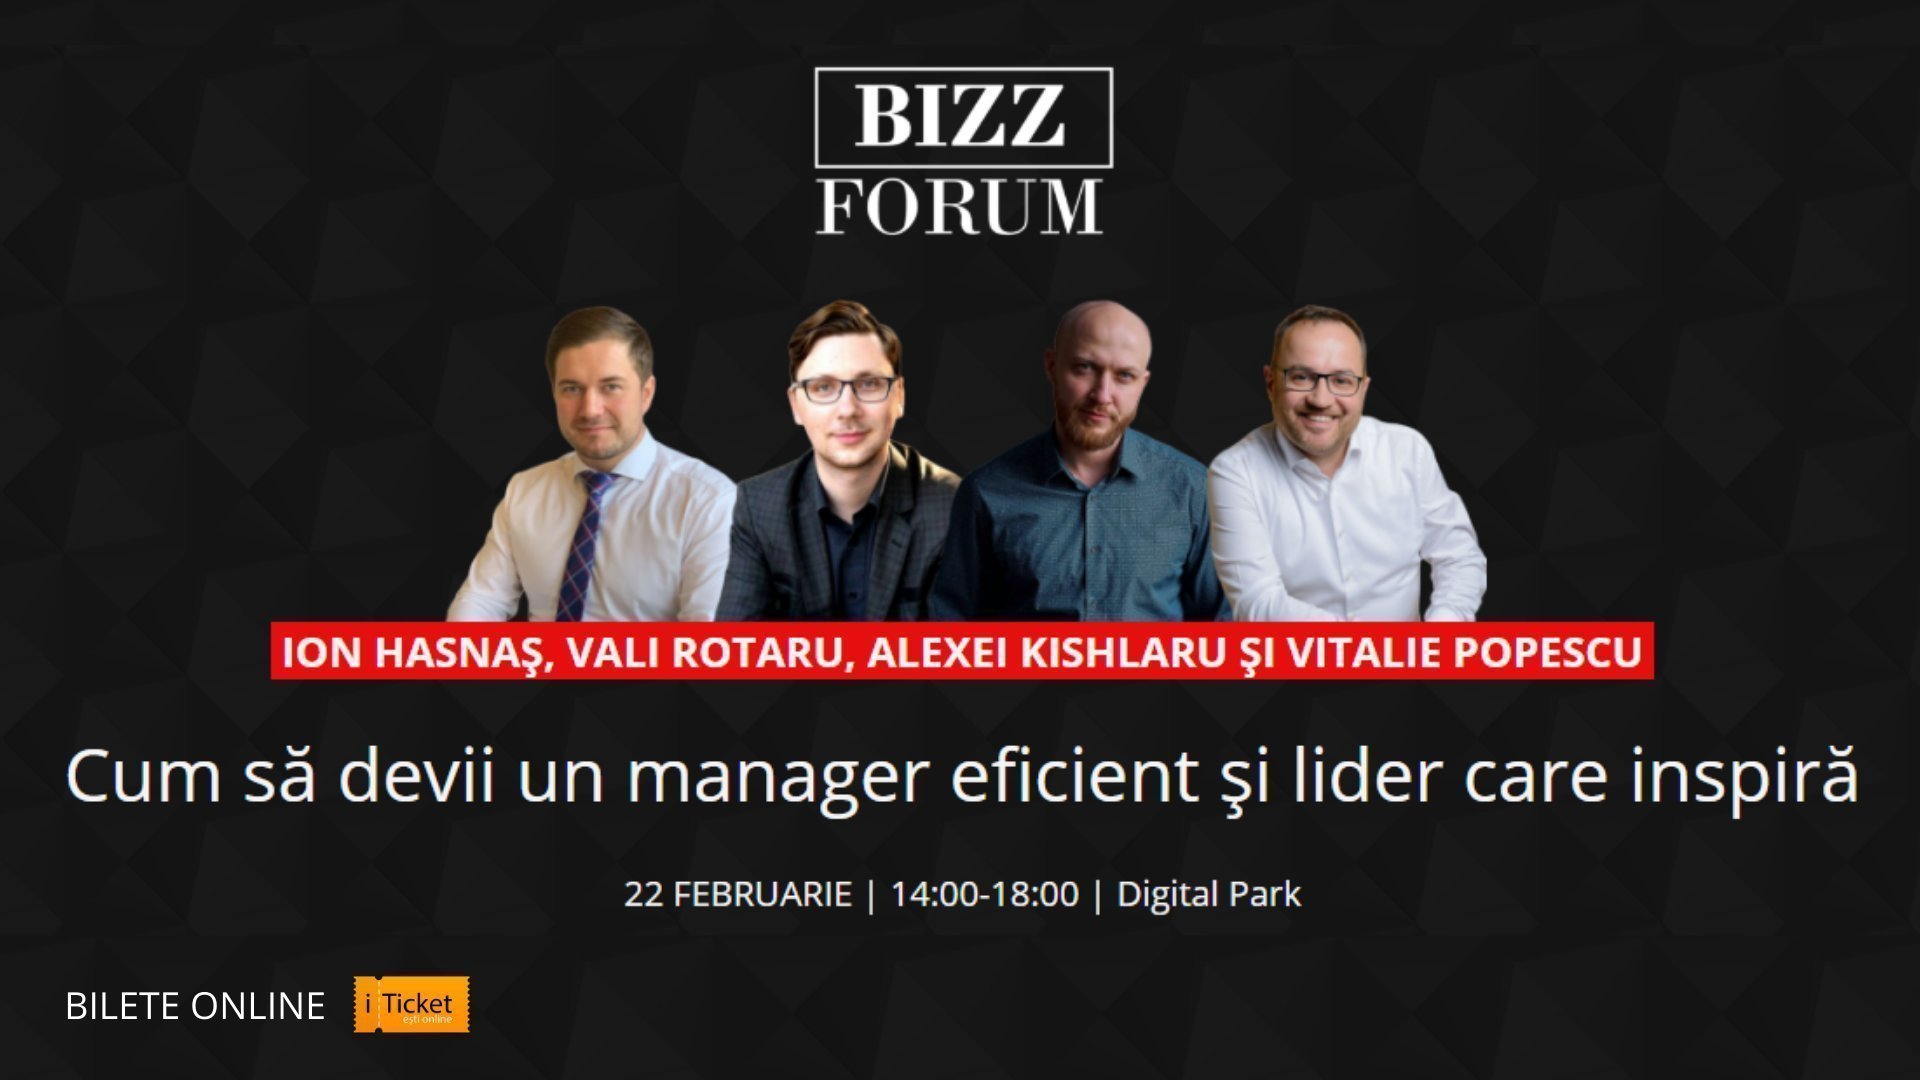 BIZZ FORUM - Cum sa devii un manager eficient si lider care inspira